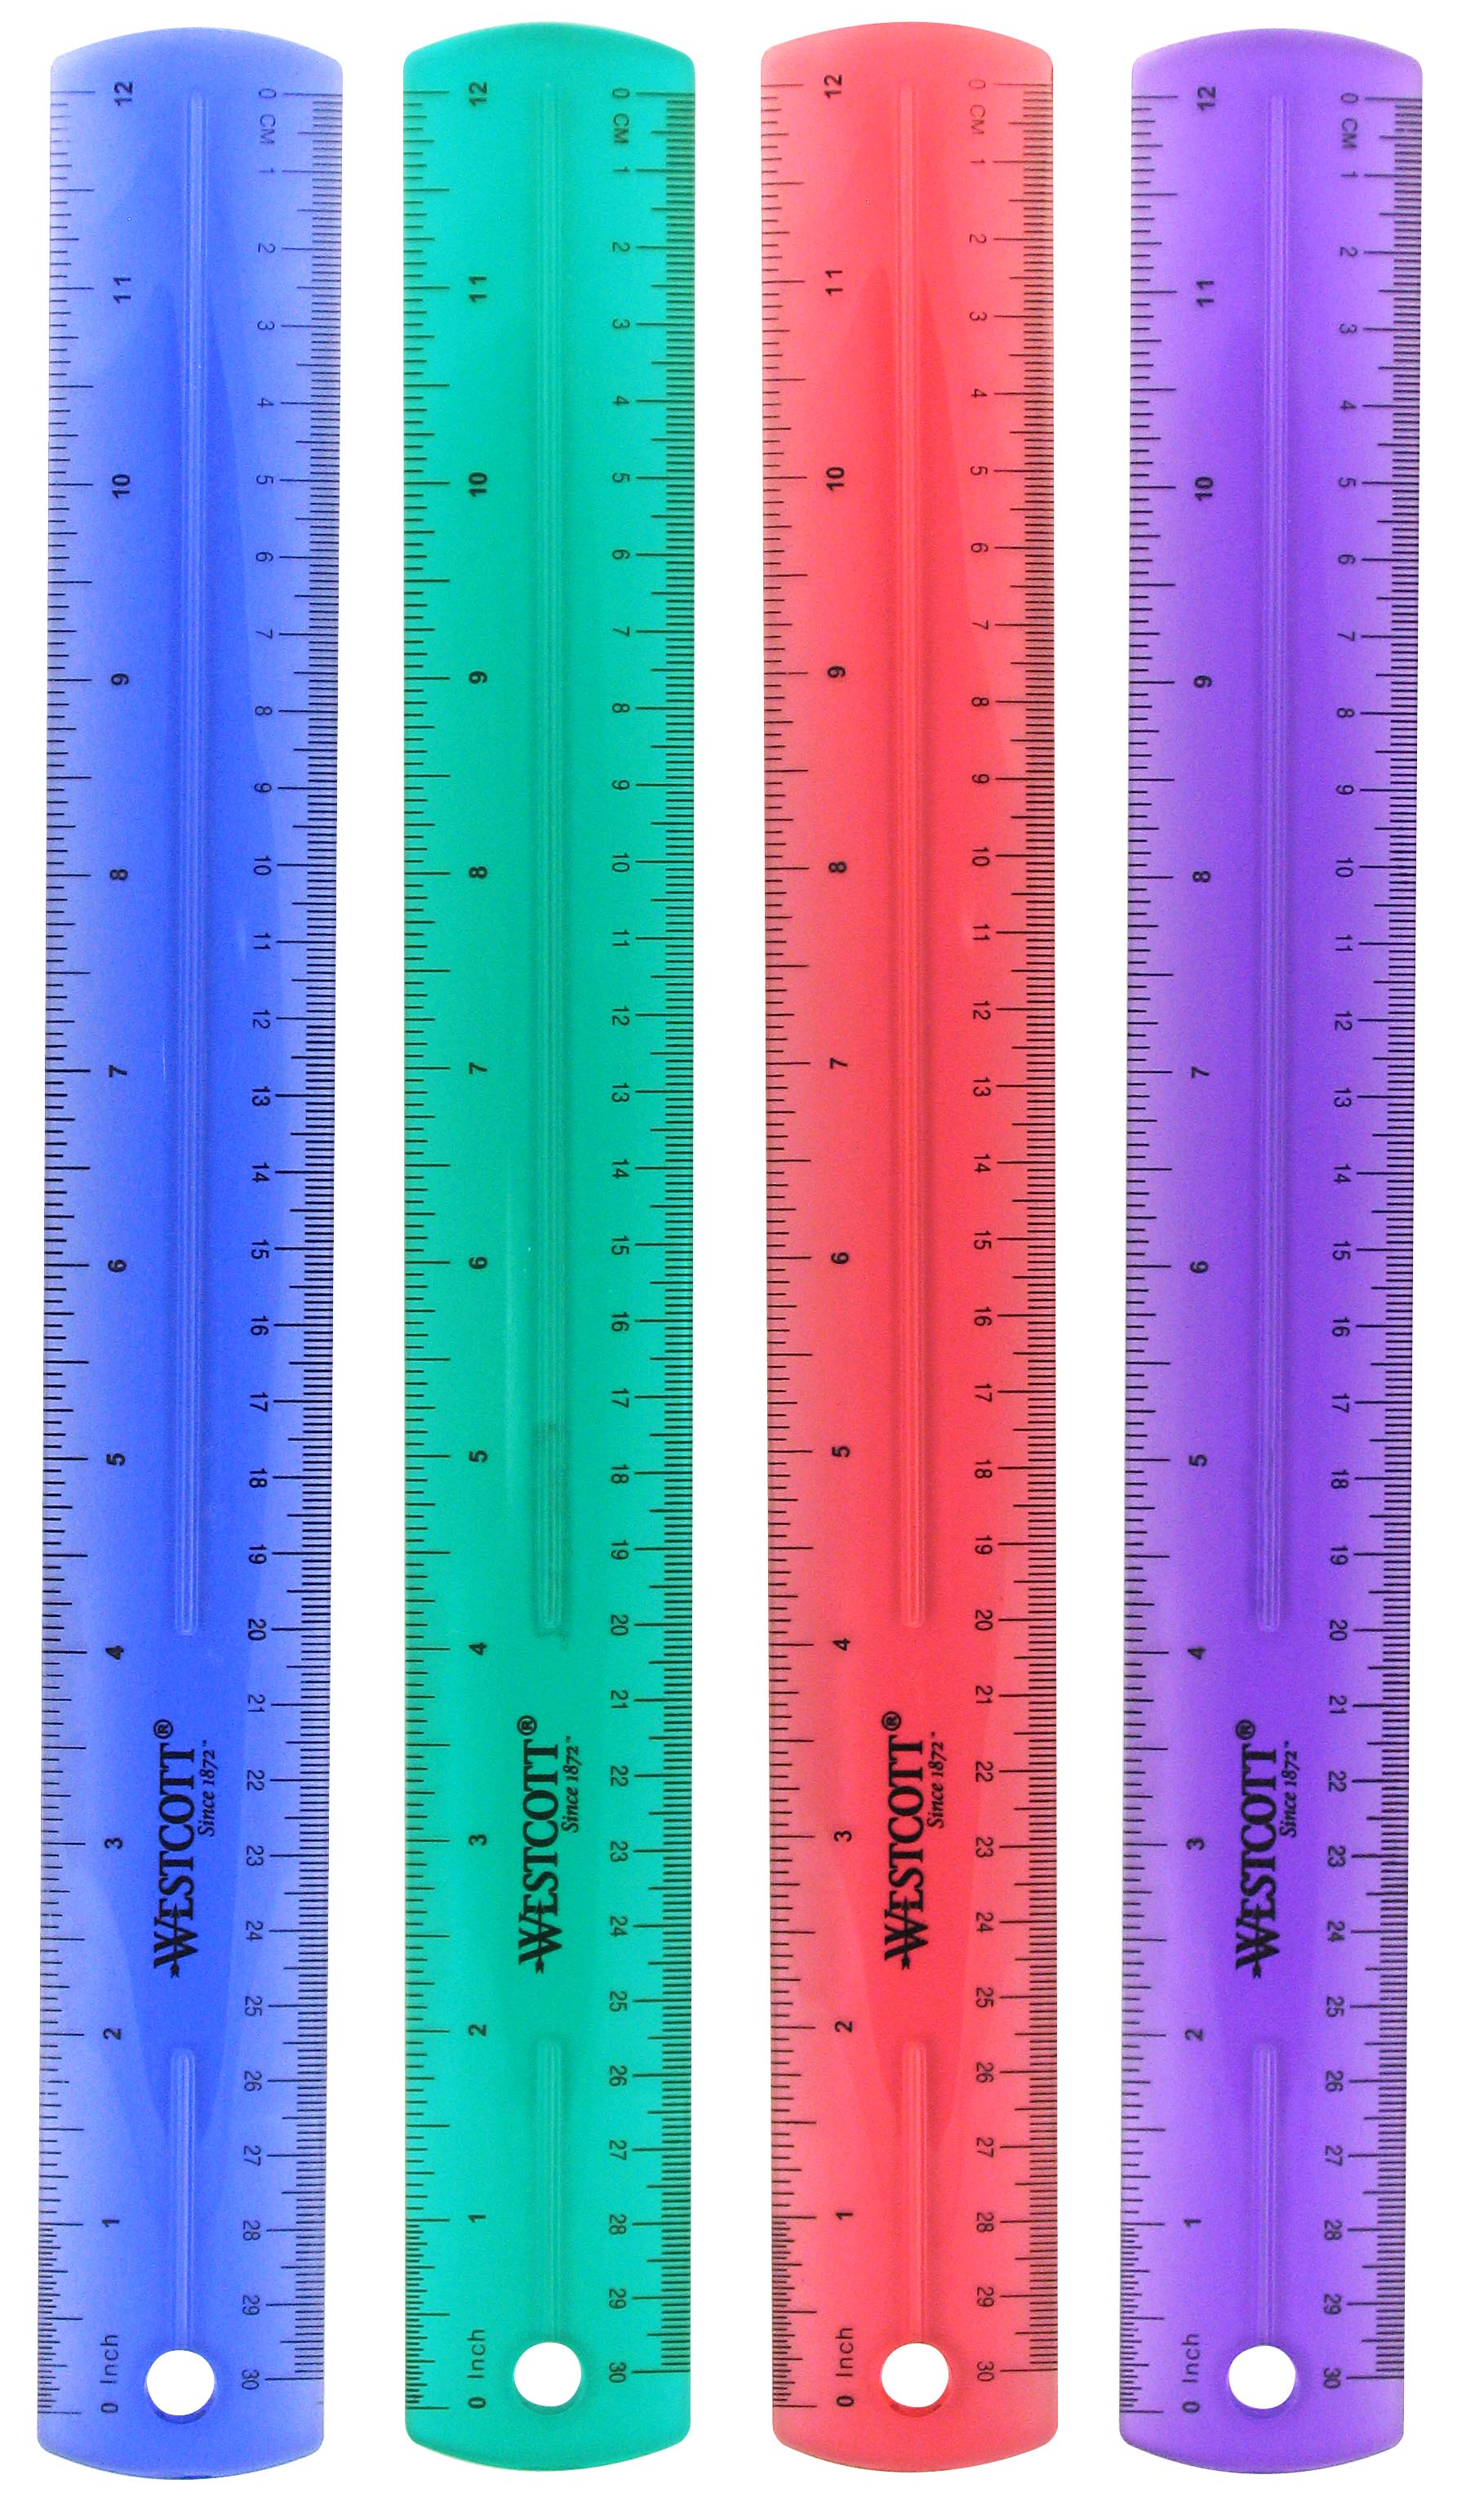 Westcott Jeweltone Plastic Ruler, 12 Inch, Assorted Transparent Colors (12975)